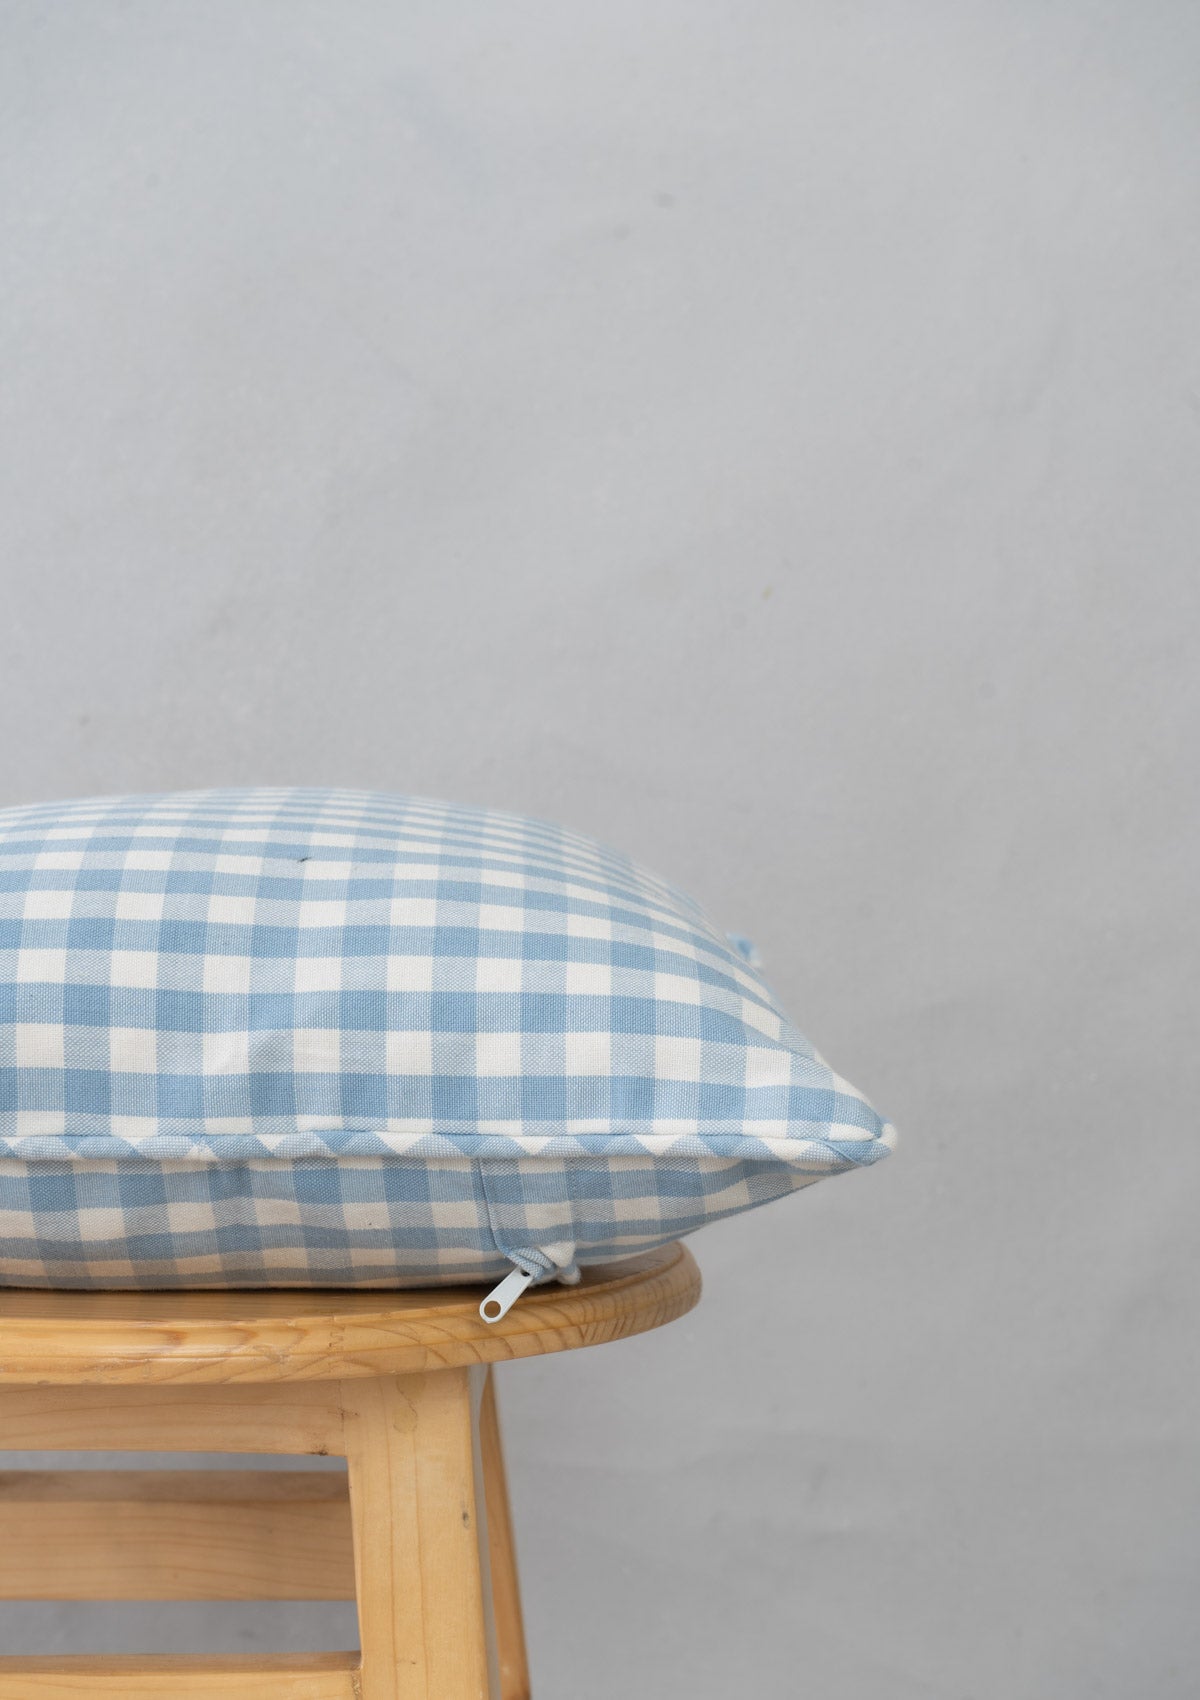 Gingham 100% cotton customizable geometric cushion cover for sofa - Powder blue